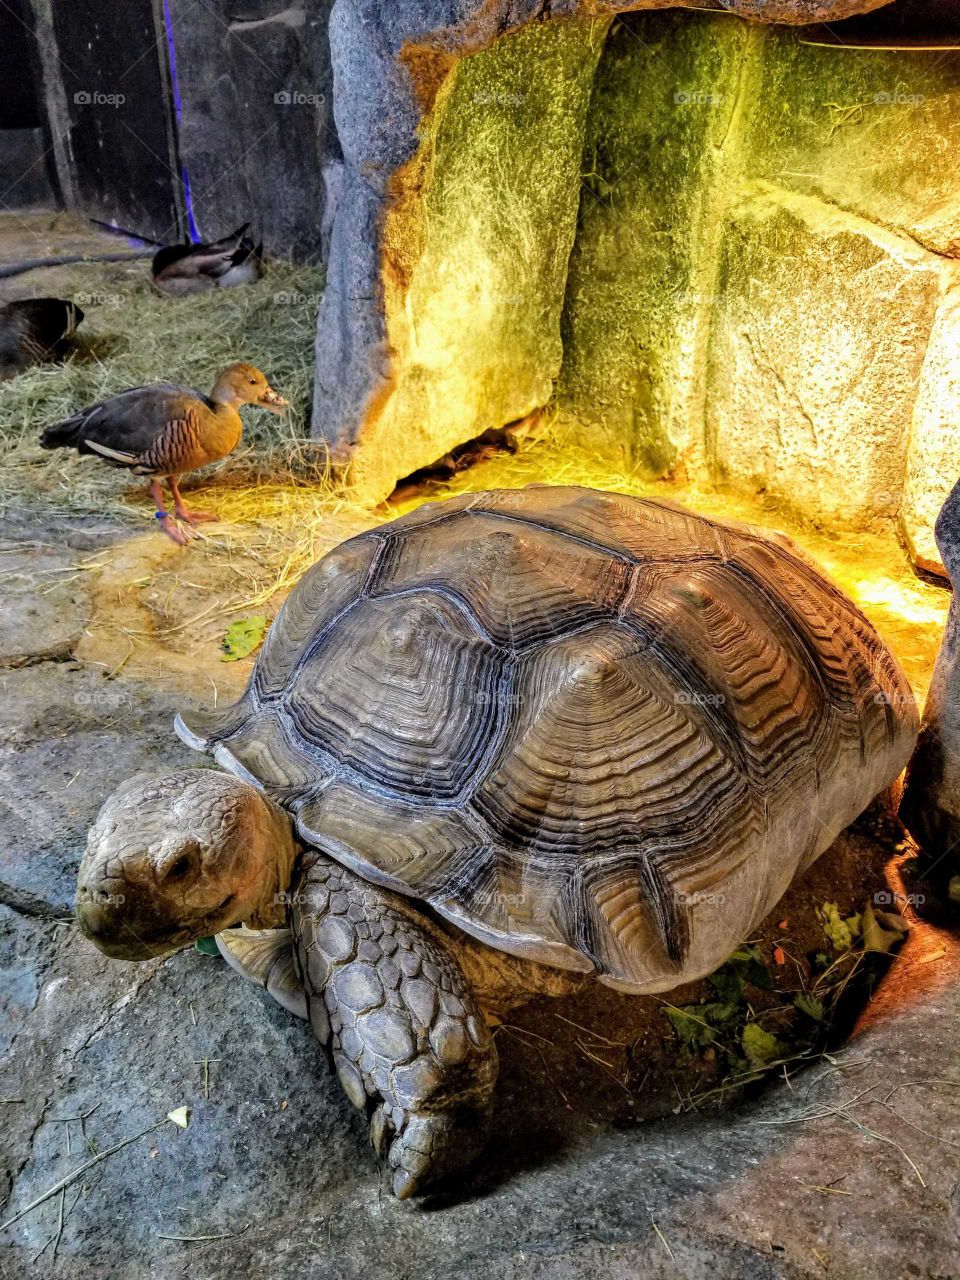 A giant tortoise walks away from the camera at Austin Aquarium, Texas.